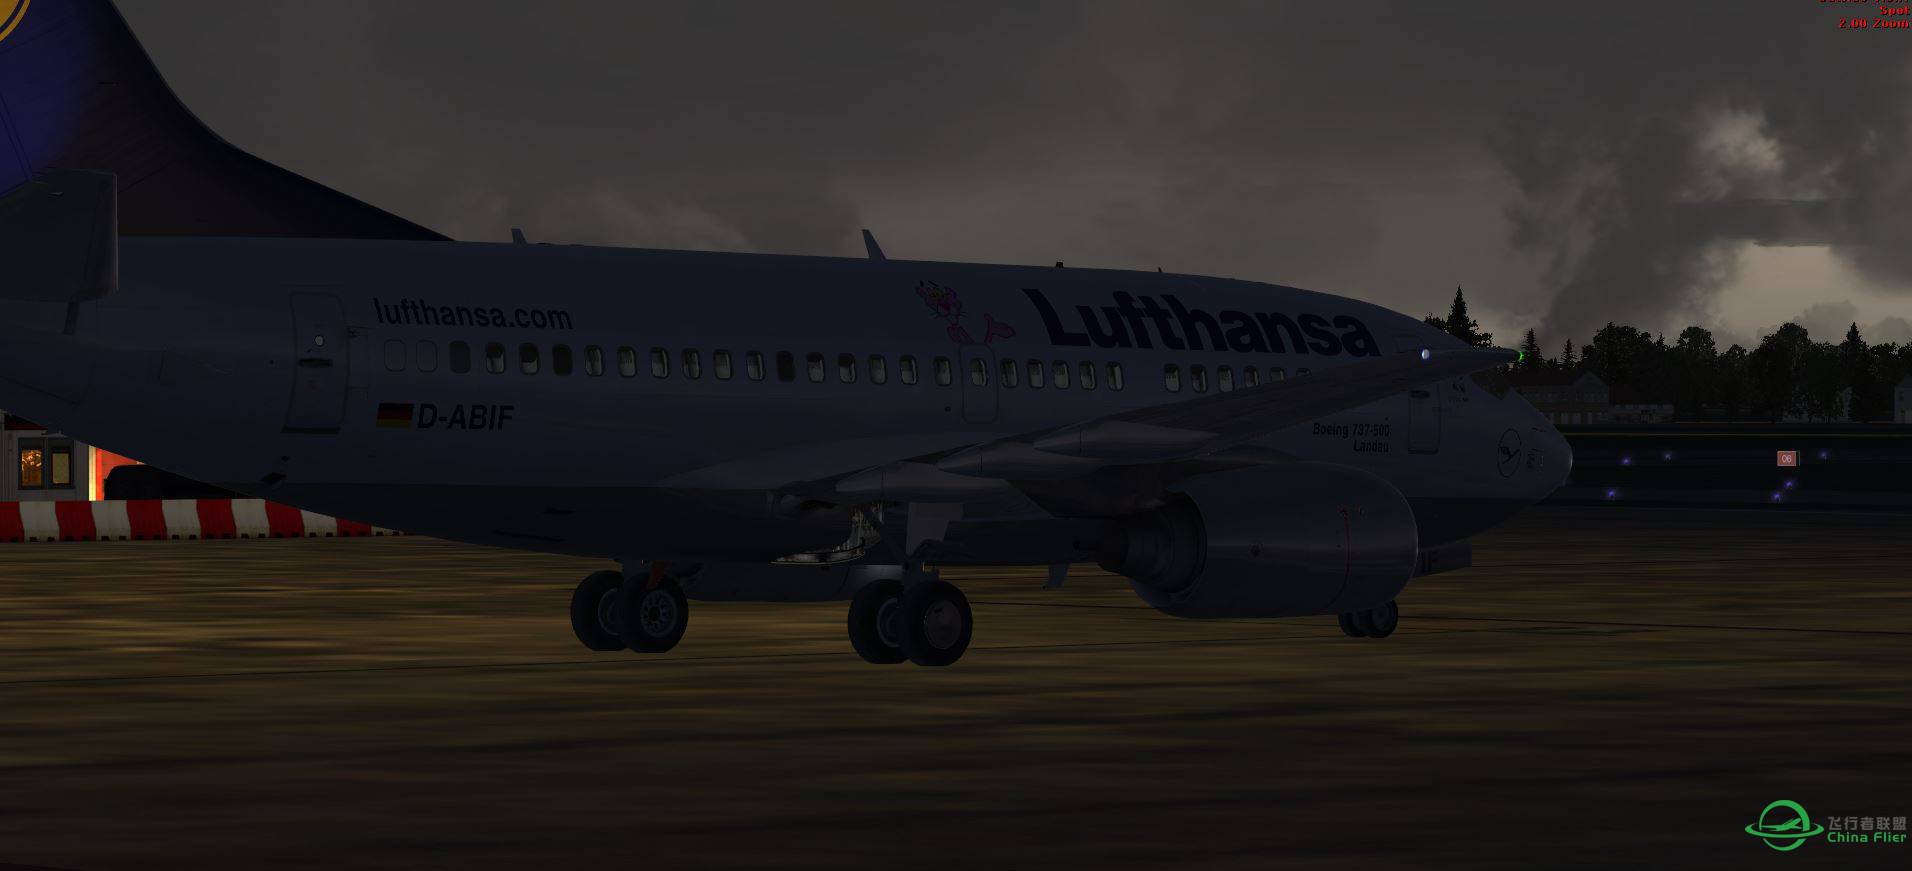 B737 Lufthansa-6289 